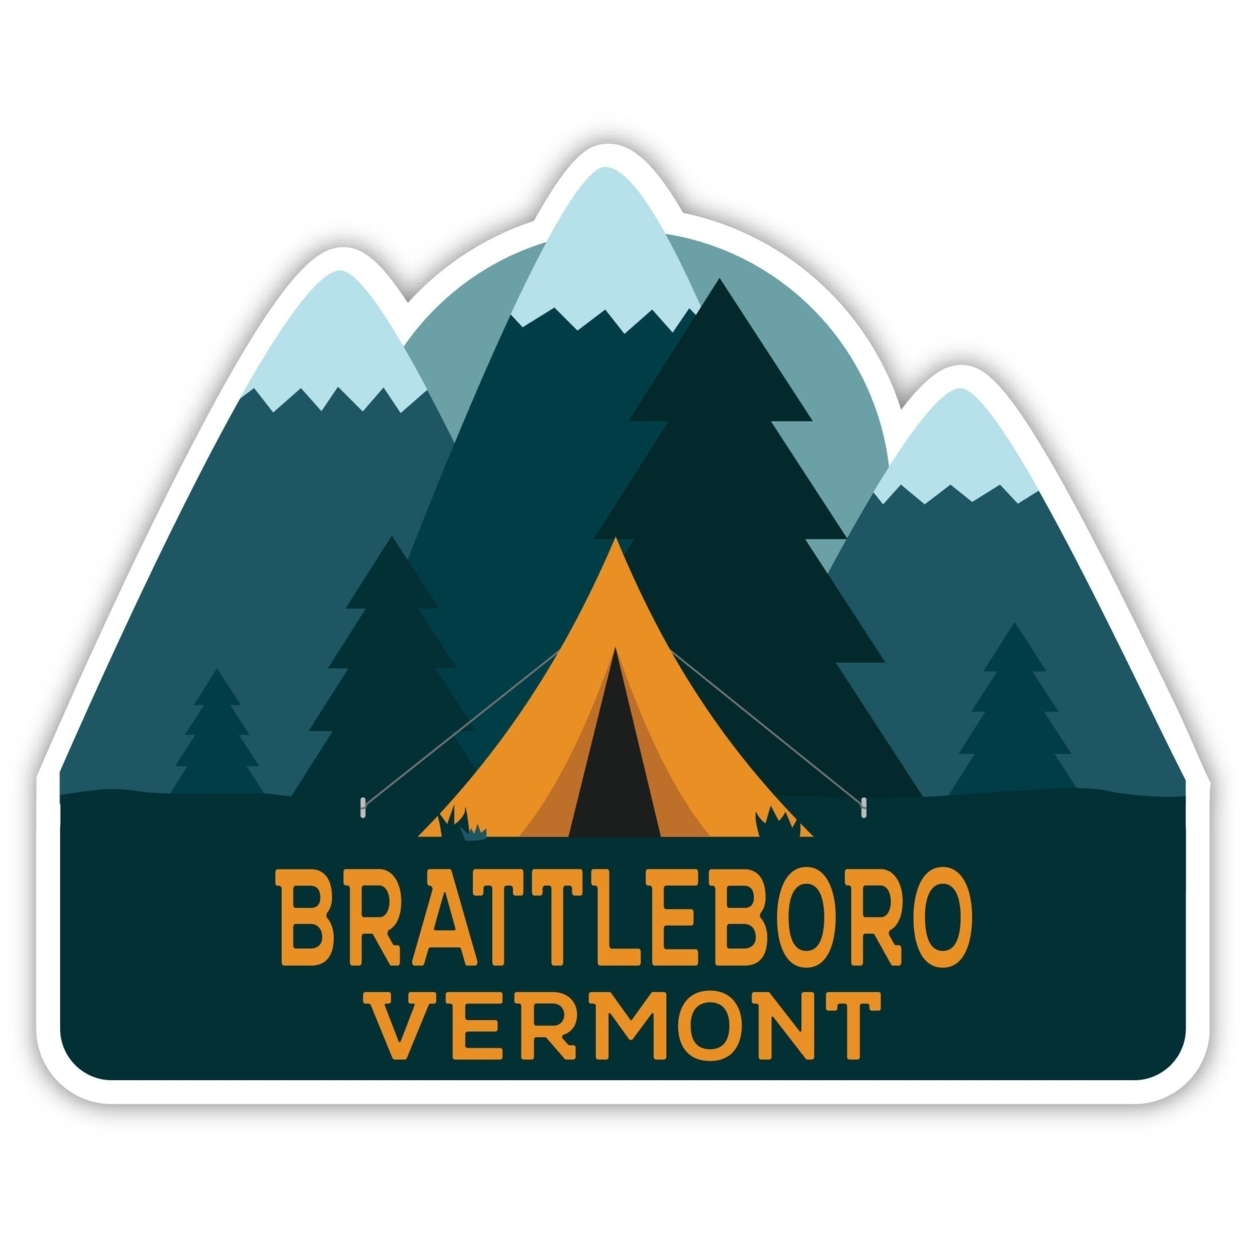 Brattleboro Vermont Souvenir Decorative Stickers (Choose Theme And Size) - 4-Pack, 12-Inch, Tent